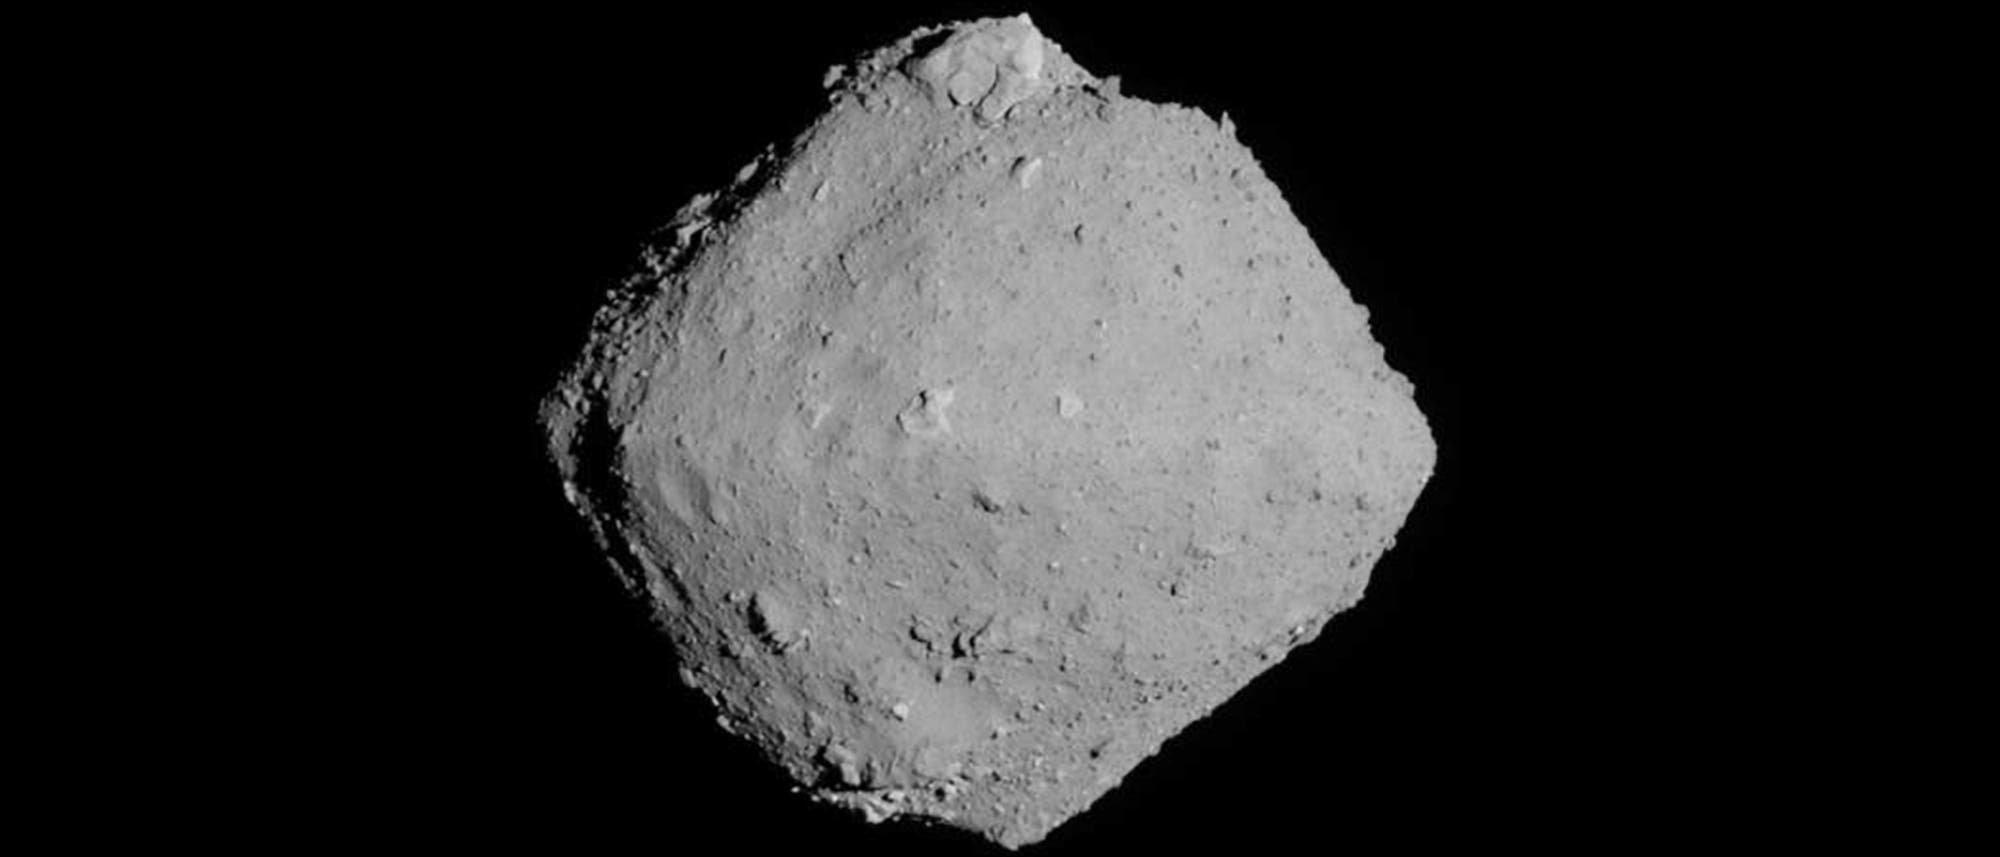 Asteroid (162173) Ryugu